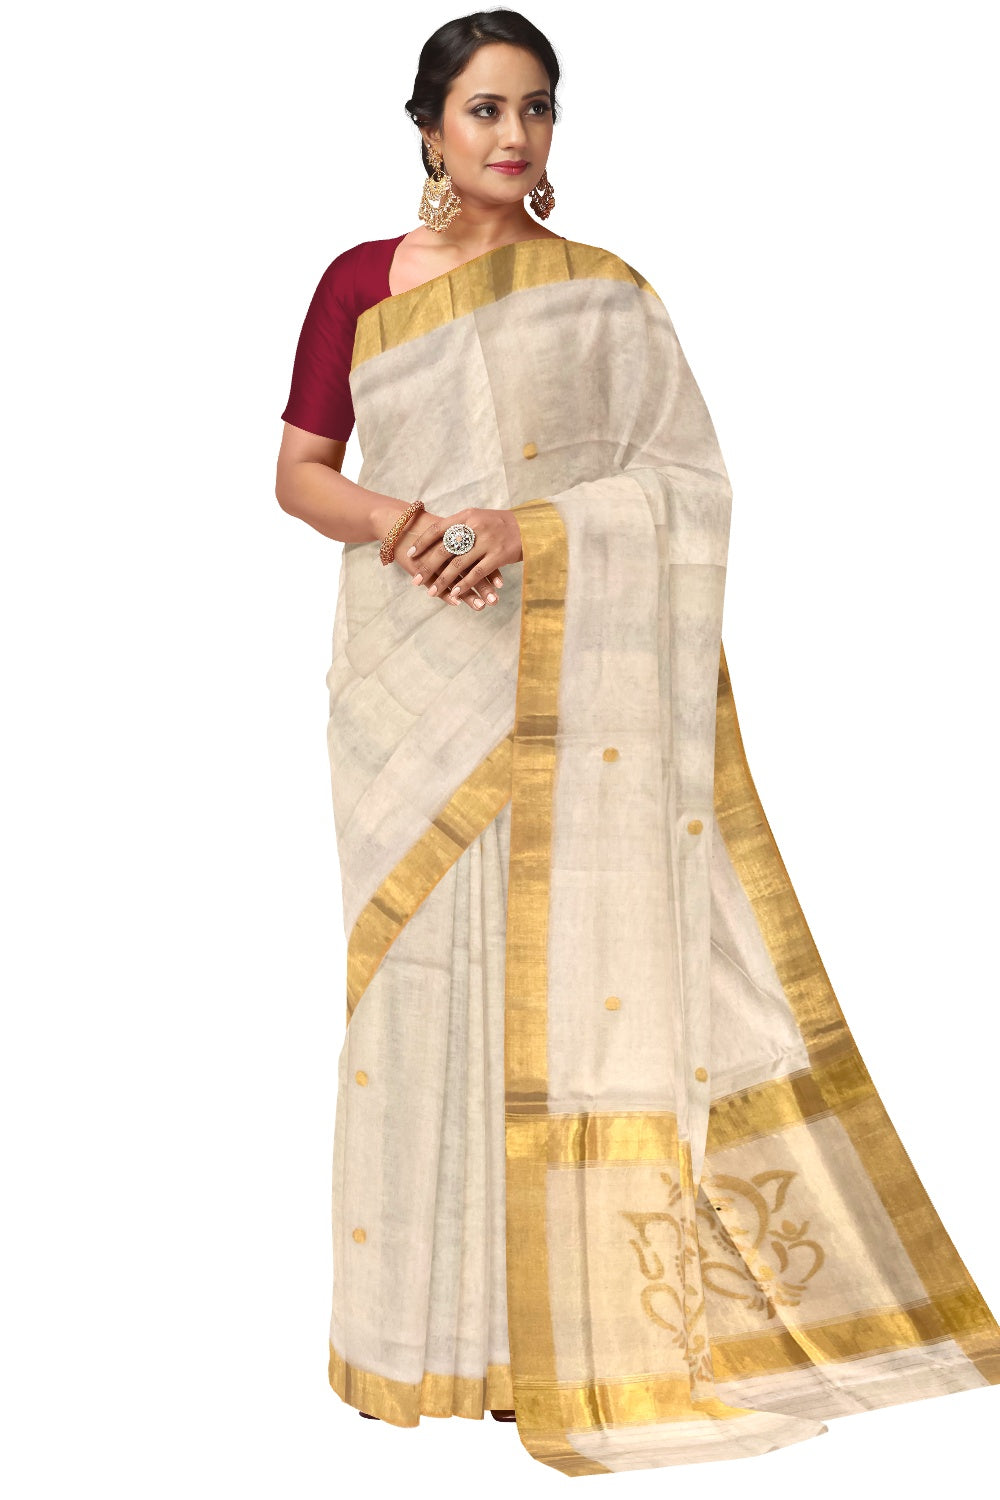 Southloom™ Handloom Premium Wedding Kasavu Saree with Ganesha Woven Works on Pallu